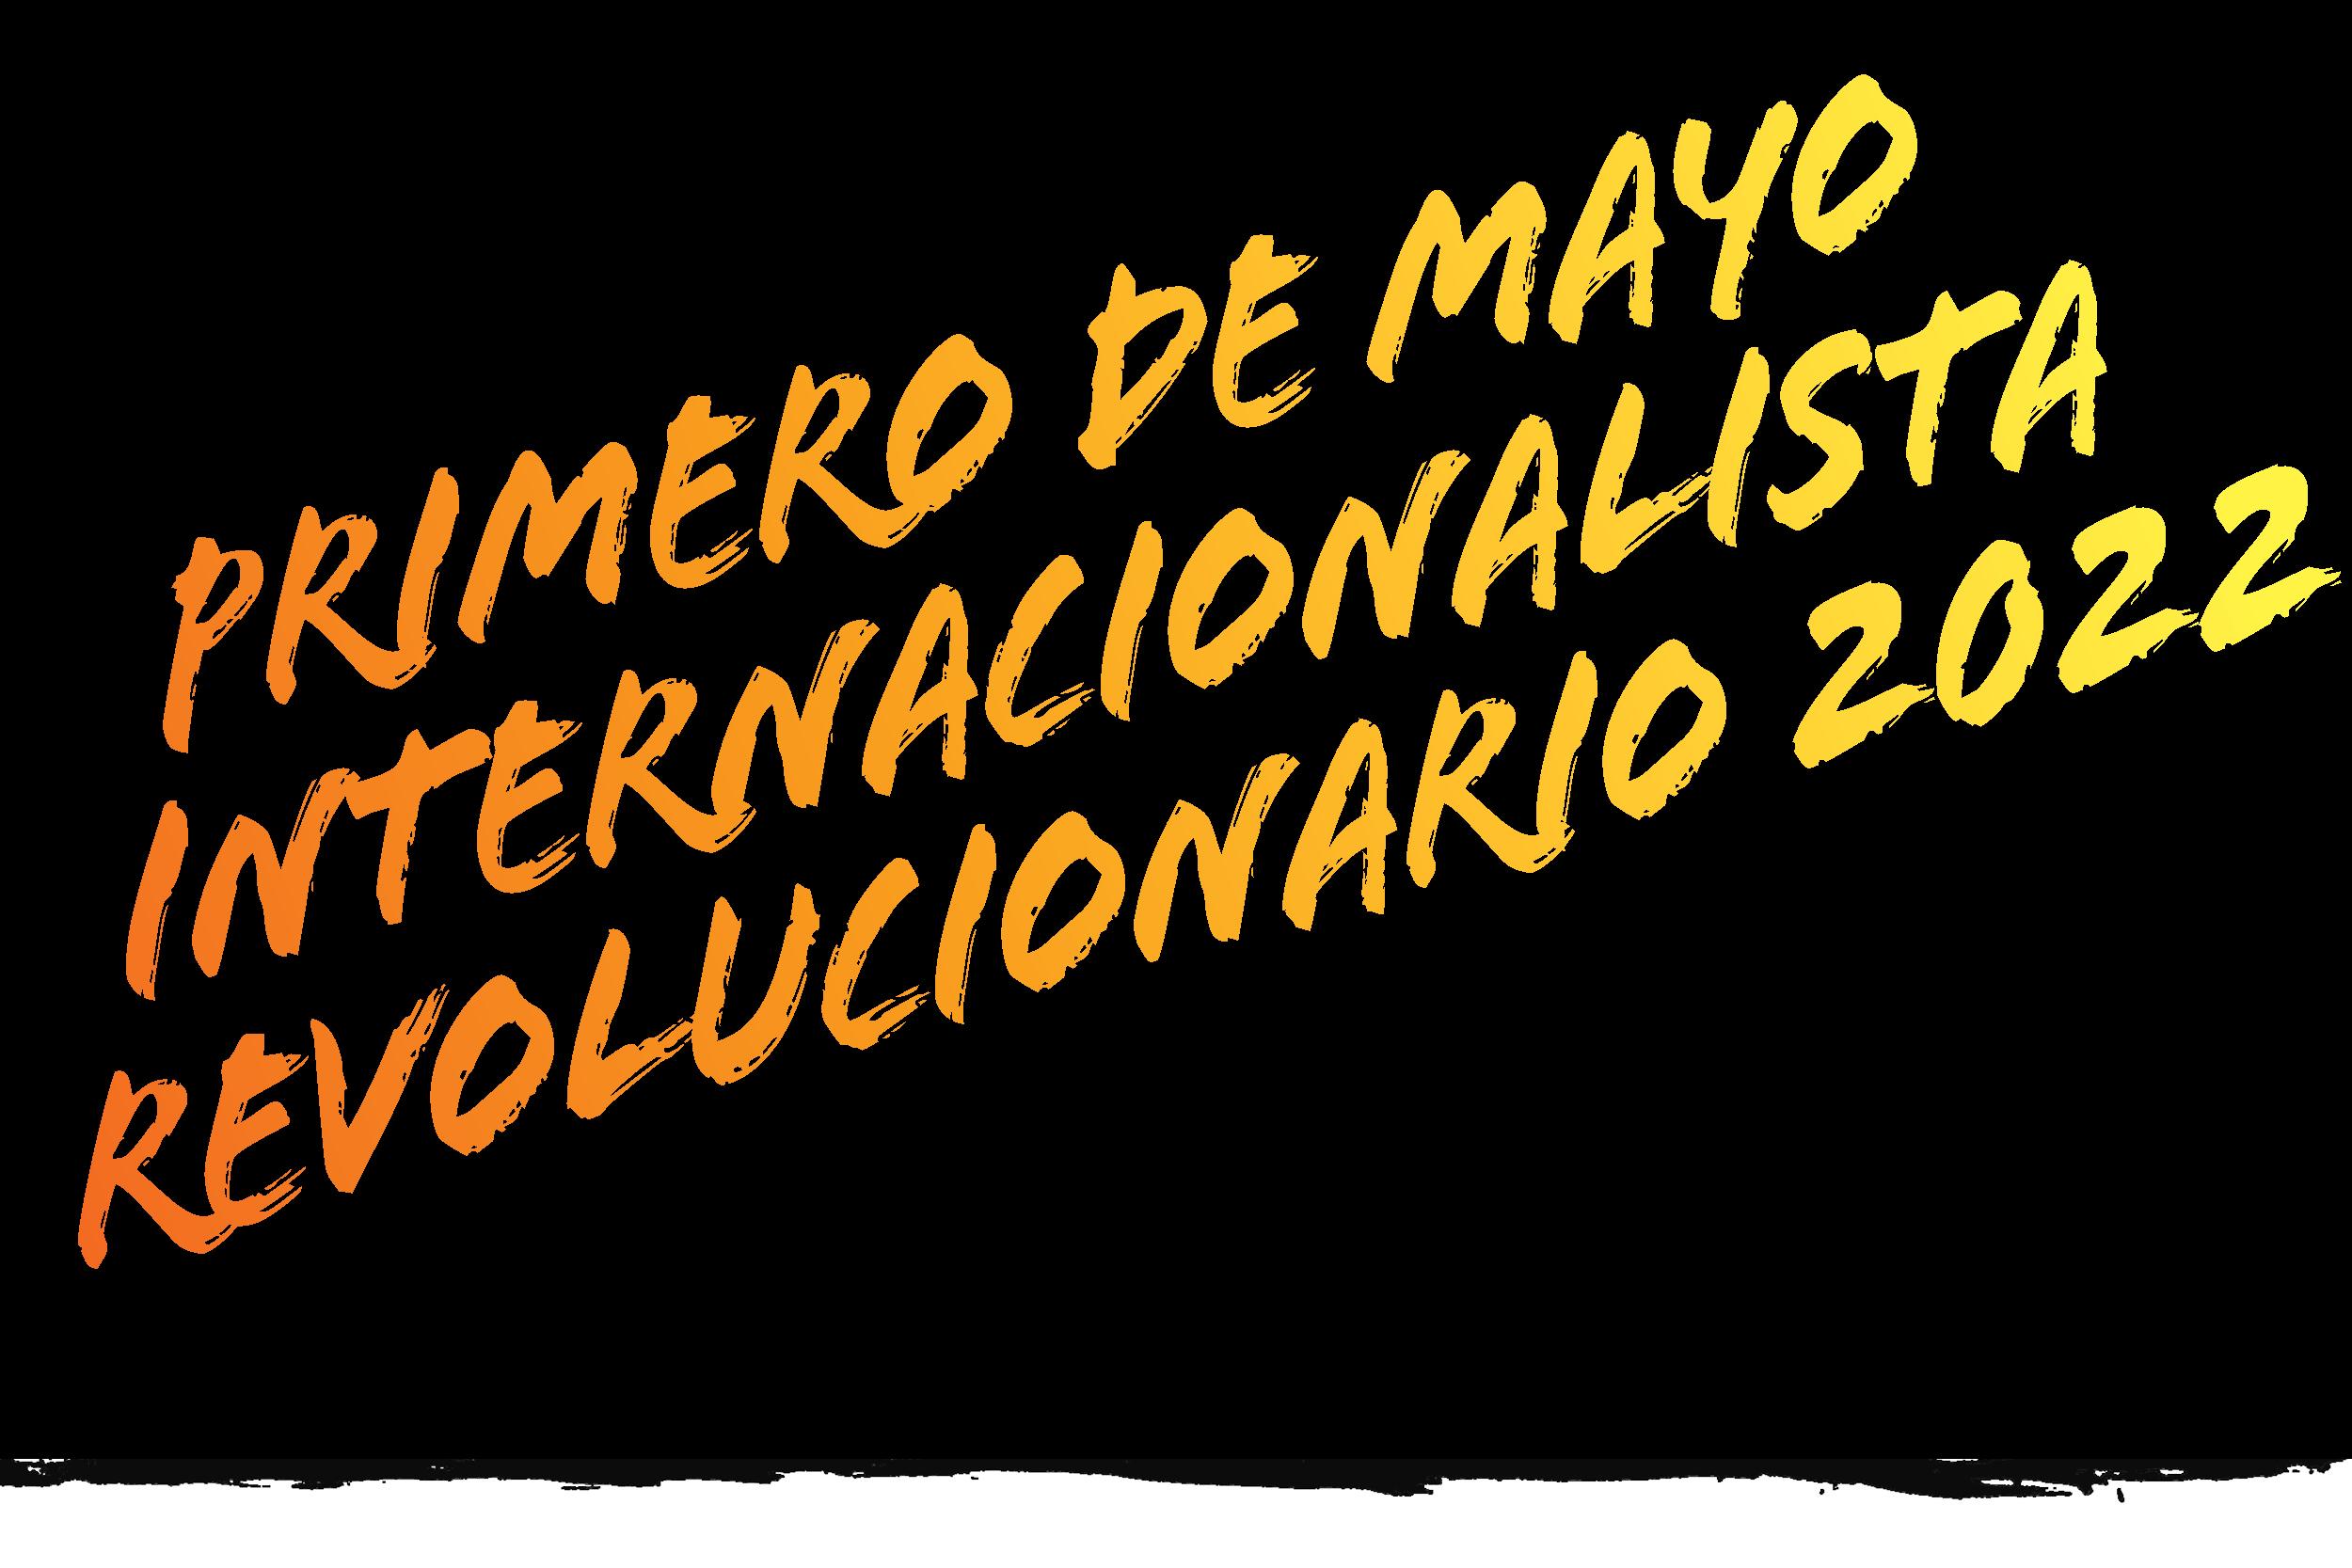 teaser Revolutionary Internationalist May Day spanish